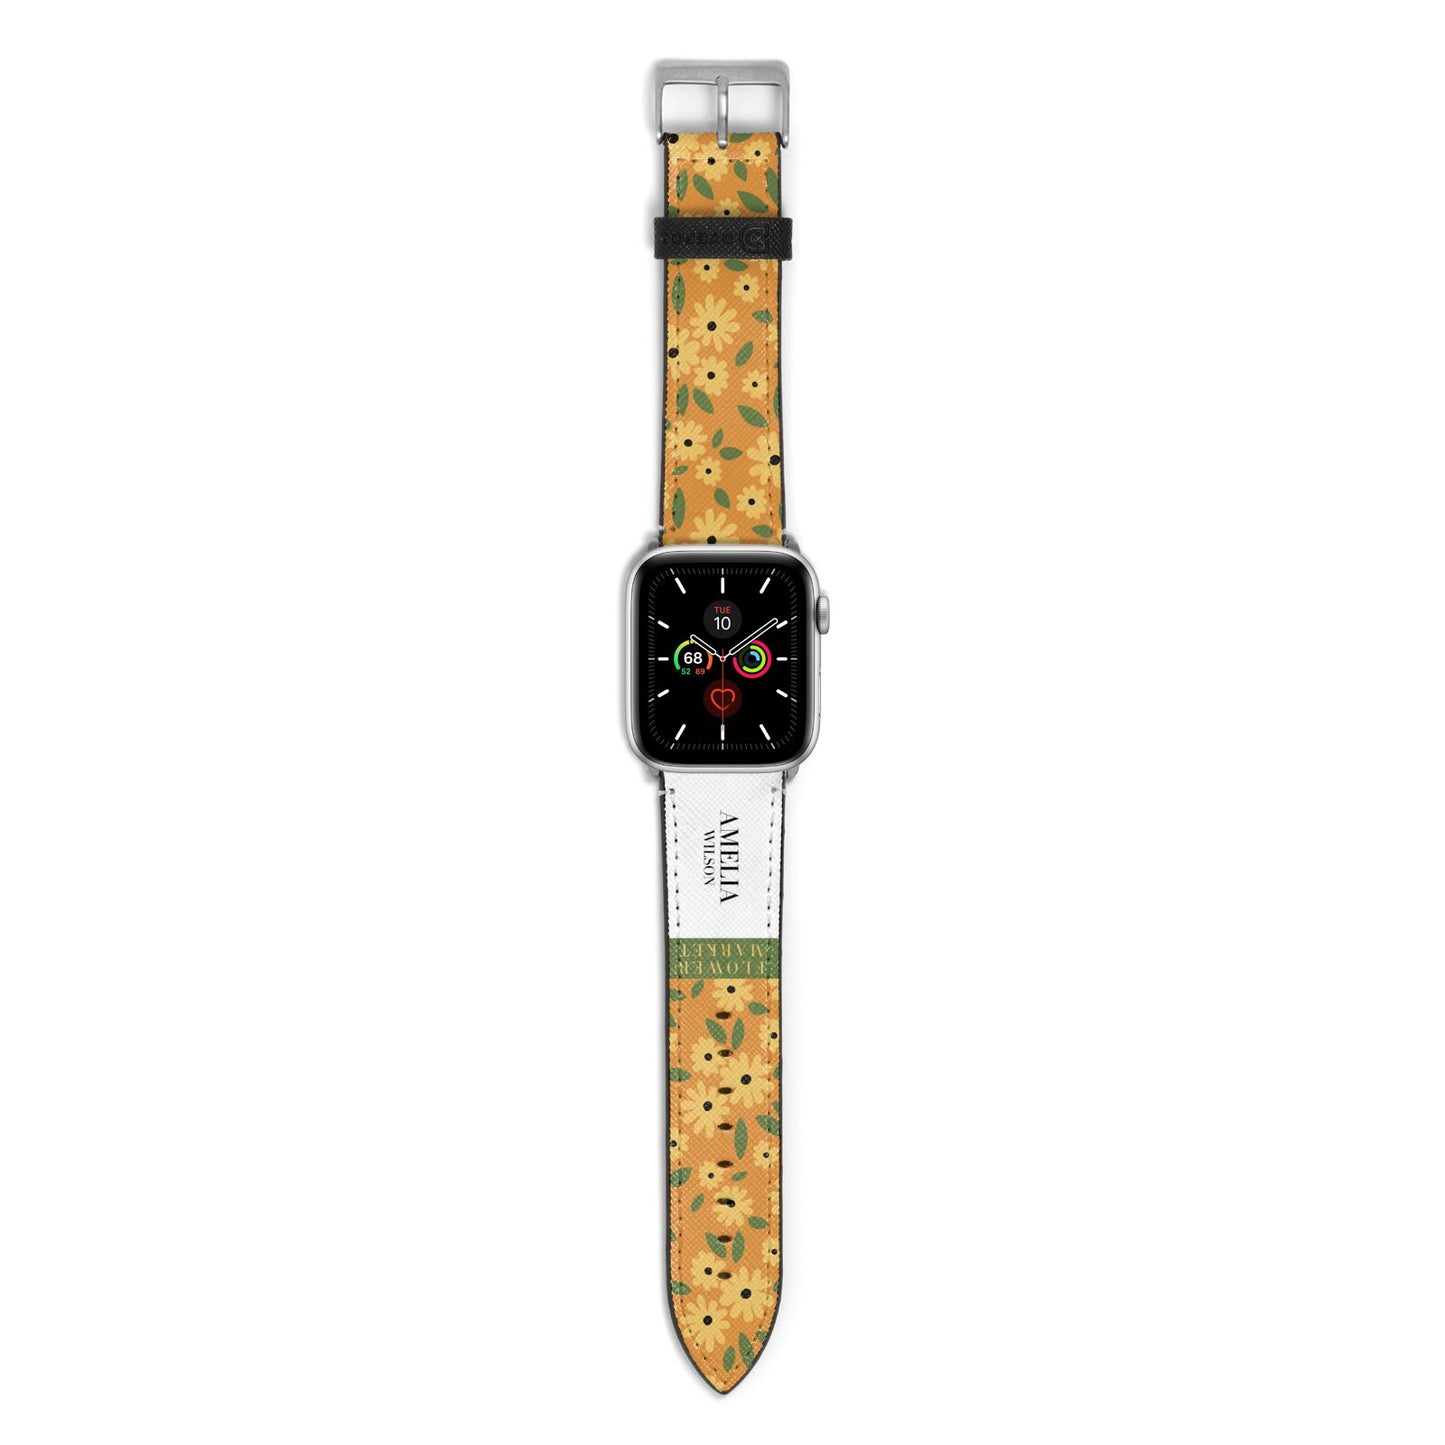 California Flower Market Apple Watch Strap with Silver Hardware